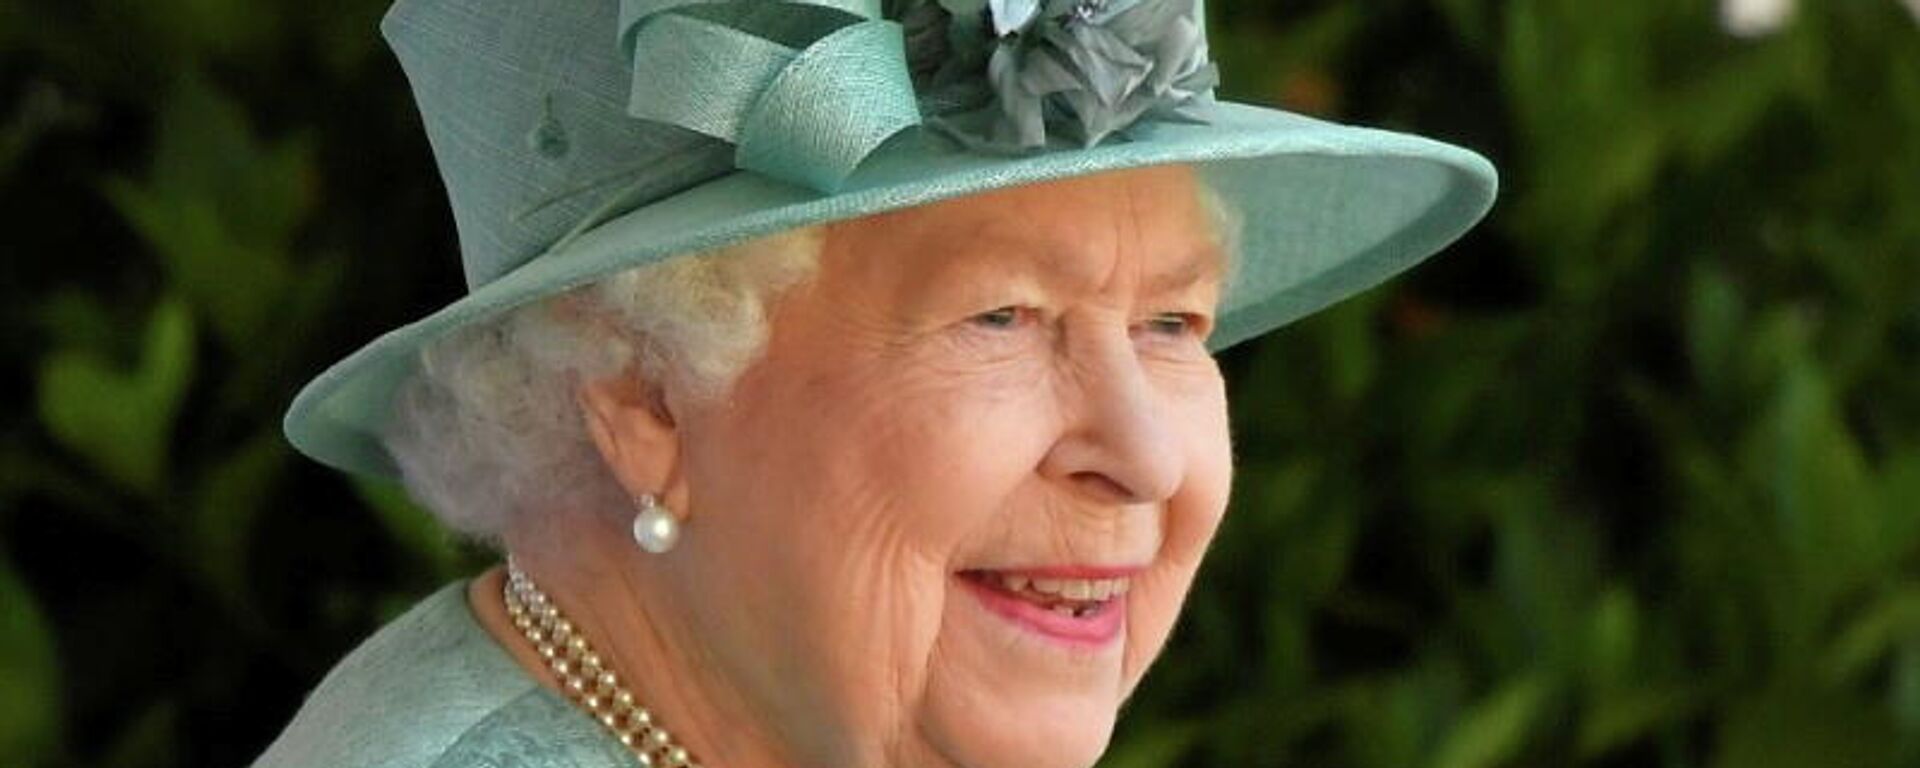 Britain's Queen Elizabeth attends a ceremony to mark her official birthday at Windsor Castle in Windsor, Britain, June 13, 2020 - Sputnik International, 1920, 15.10.2021